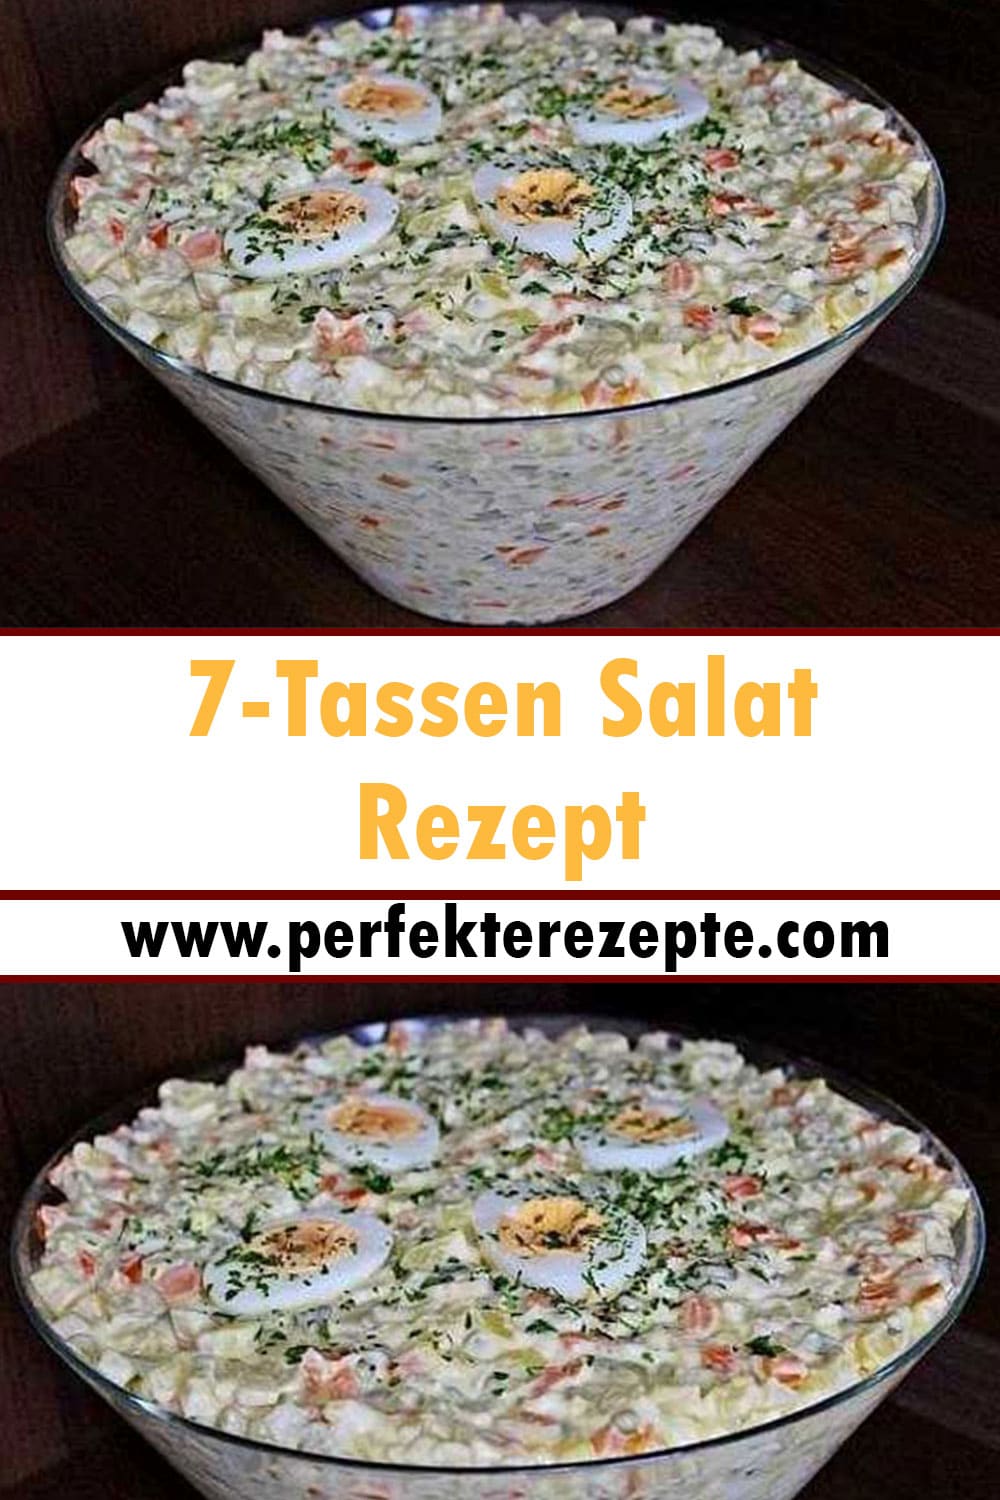 7-Tassen Salat Rezept: einzigartig lecker